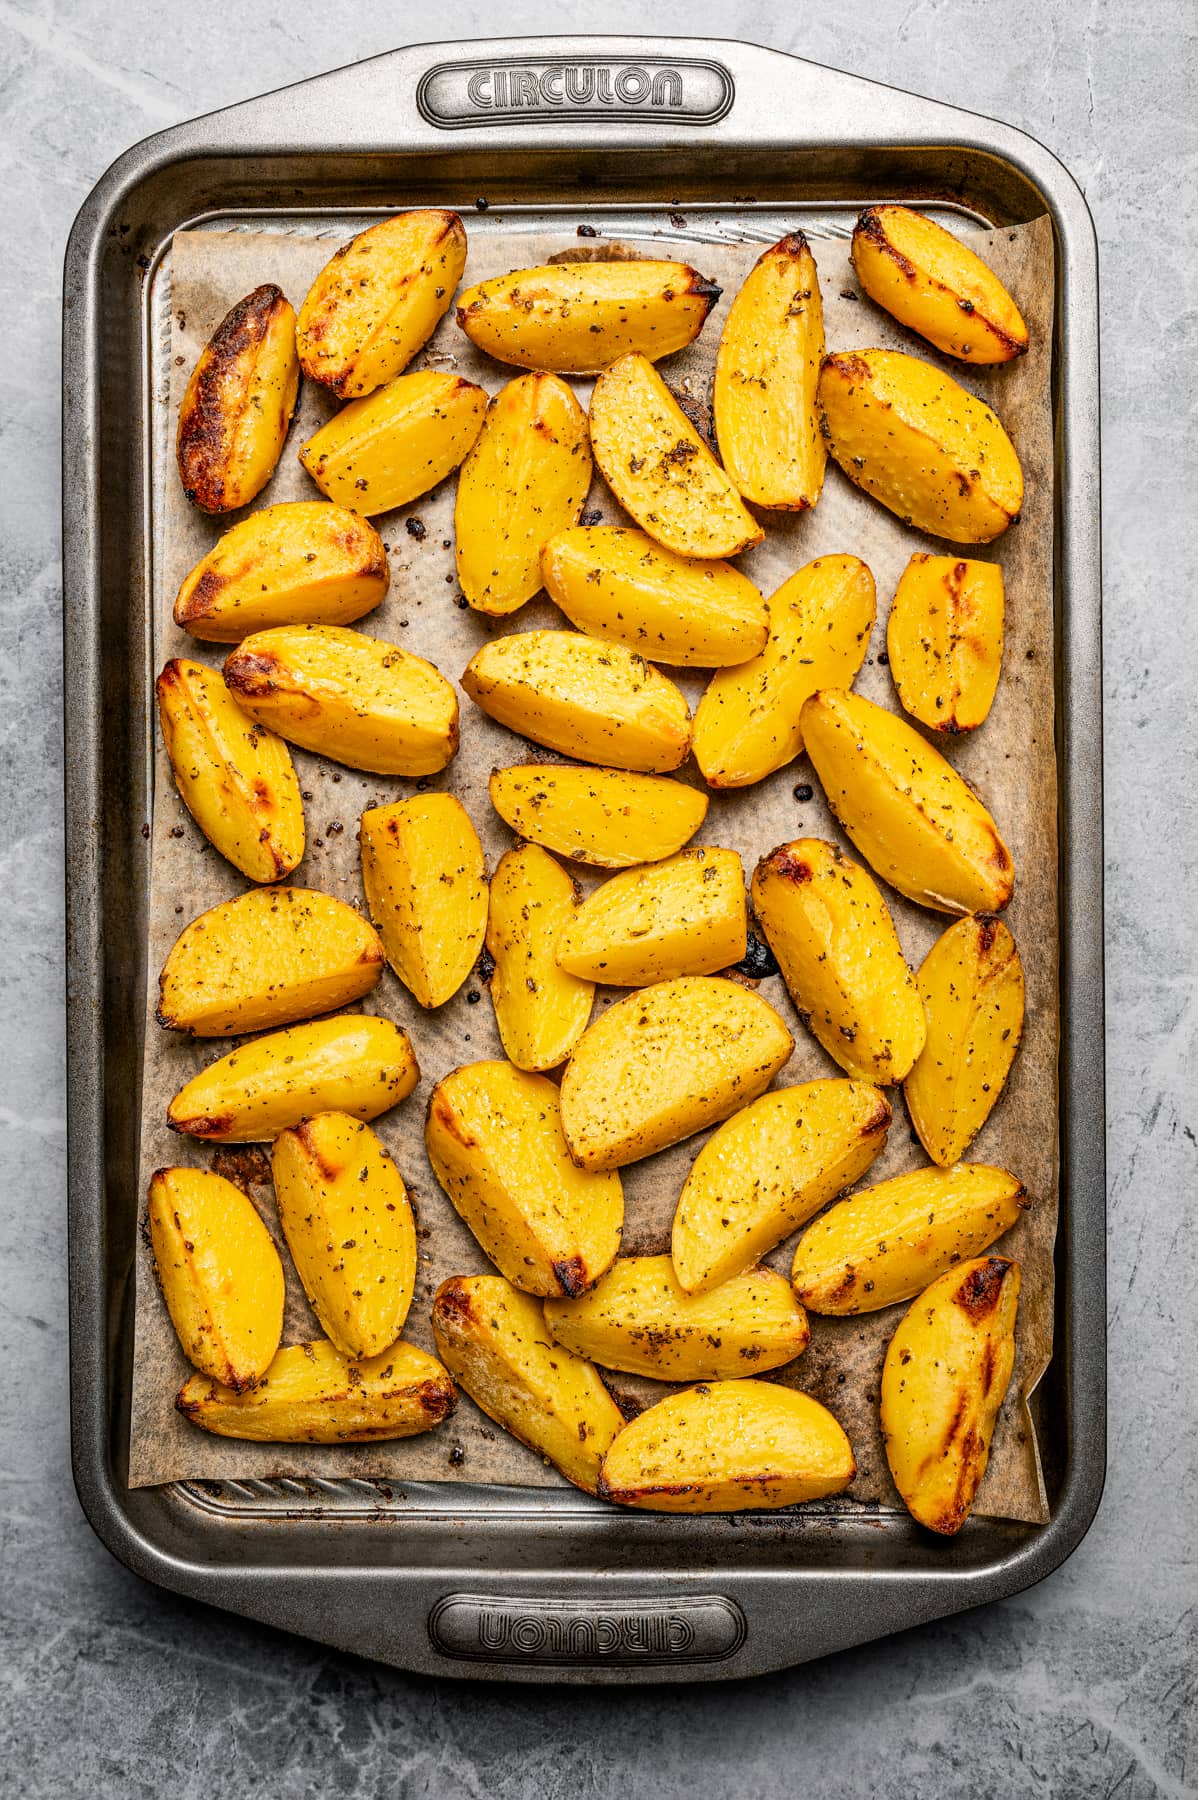 Roasted potato wedges on a sheet pan.